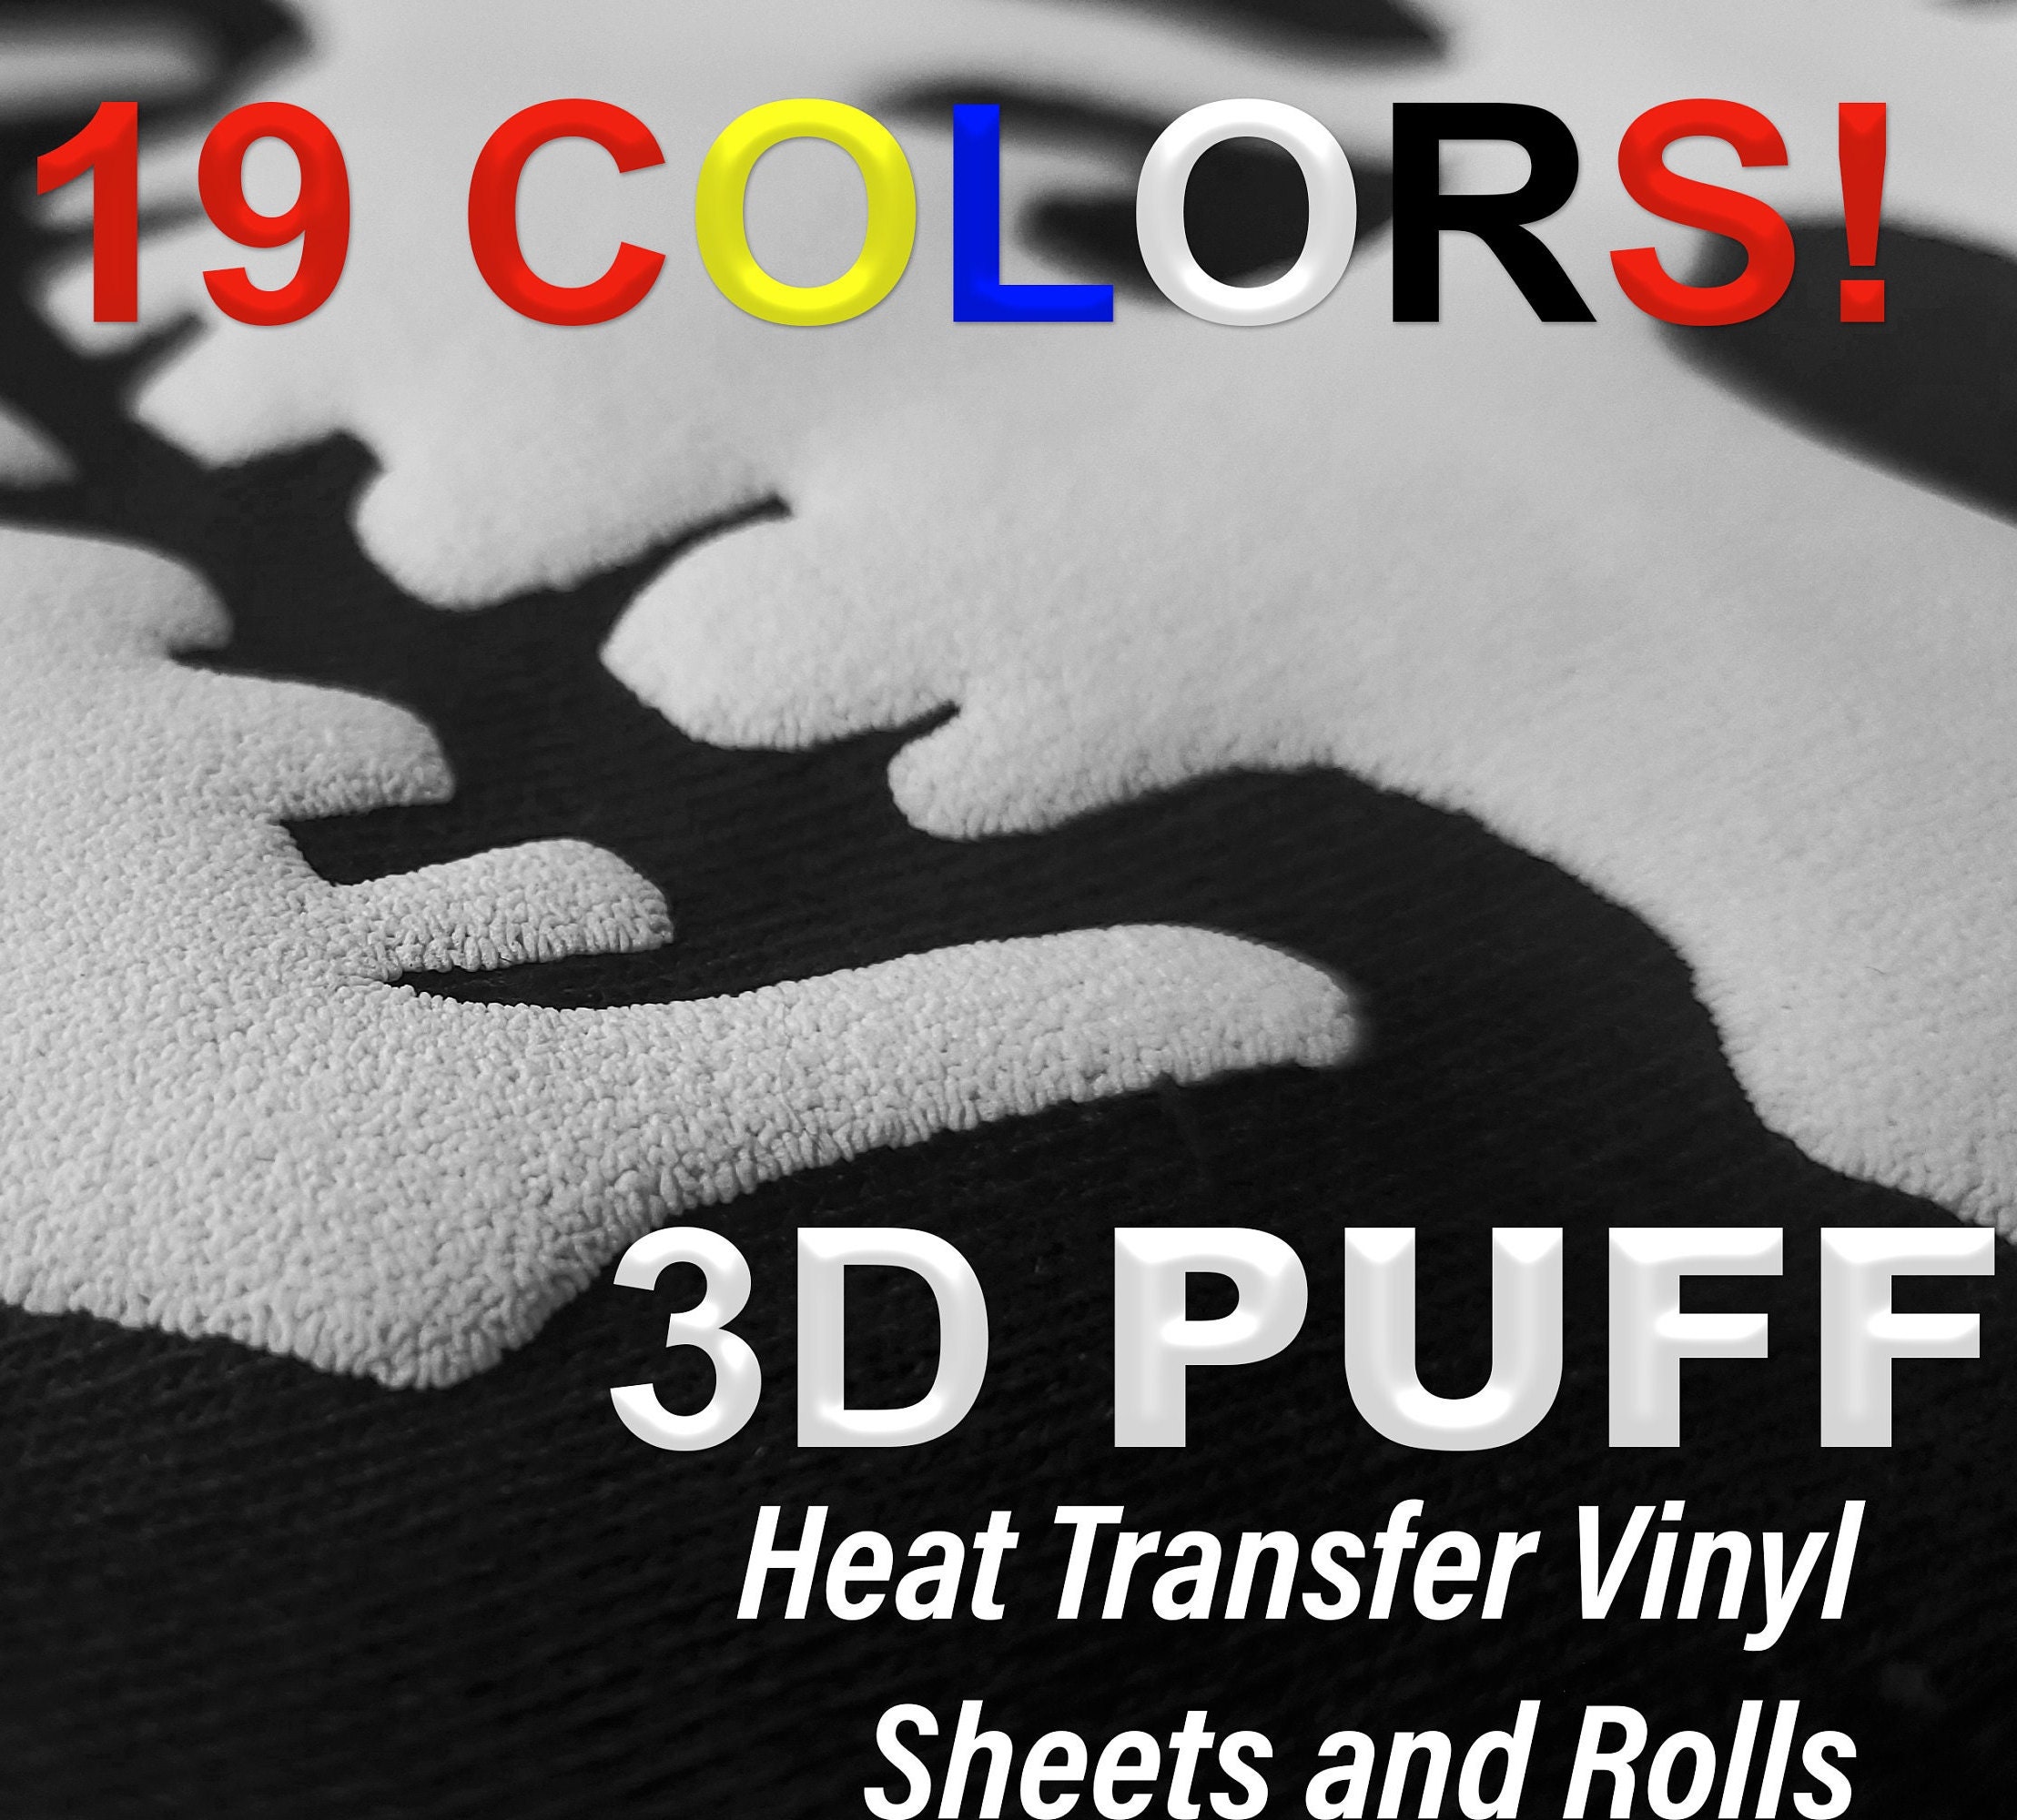 Puff 3D Heat Transfer Vinyl (HTV)– Just Vinyl and Crafts